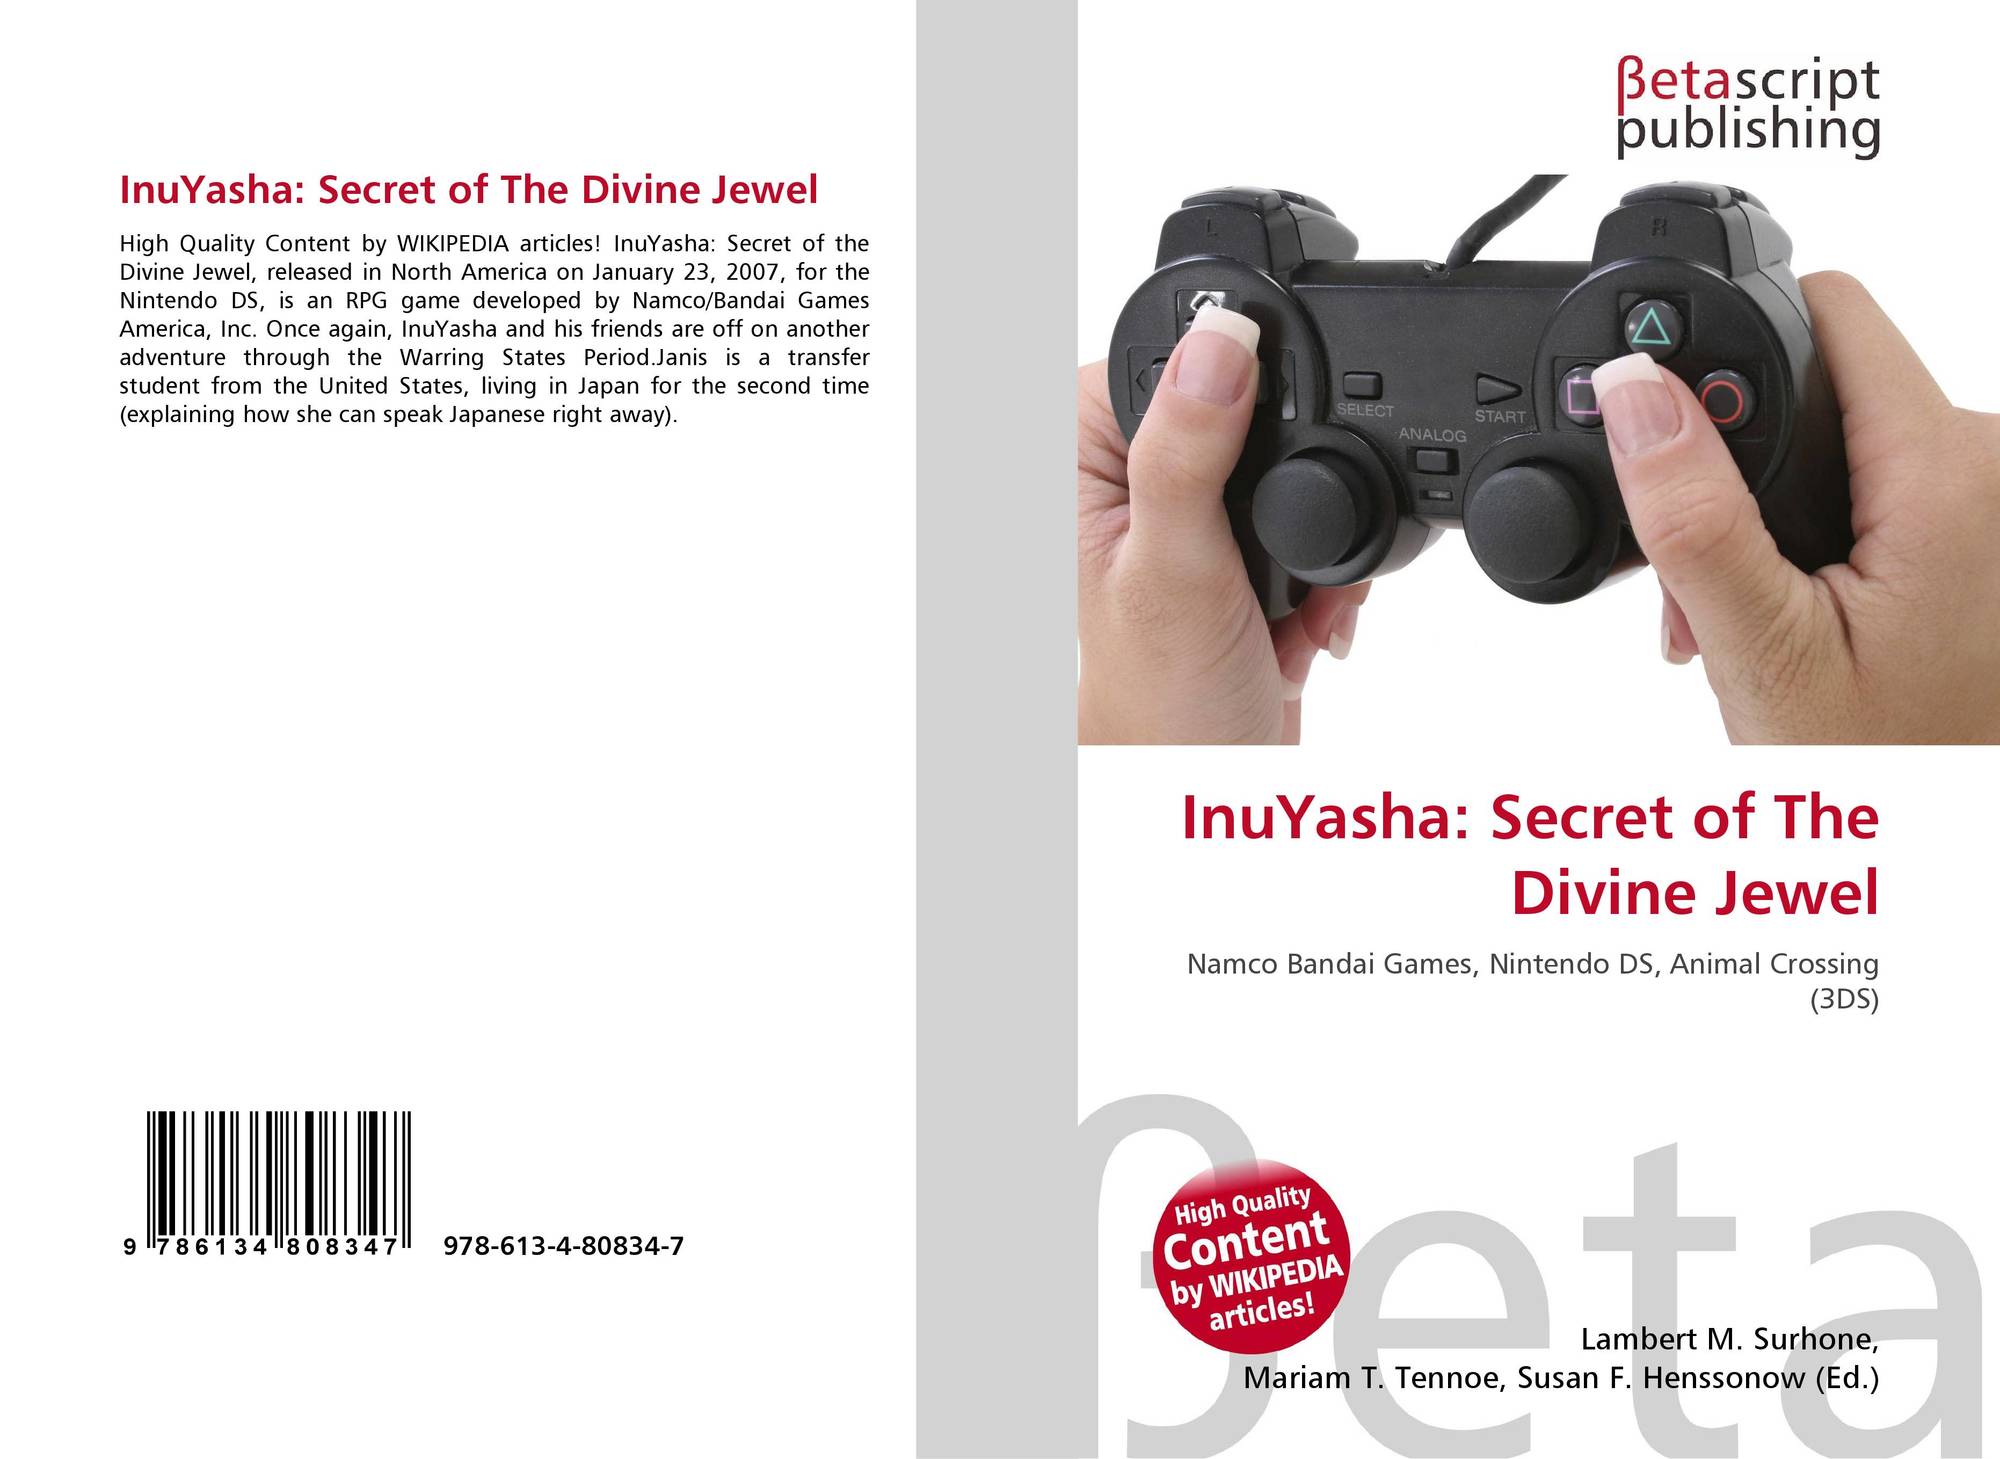 inuyasha secret of the divine jewel nintendo ds